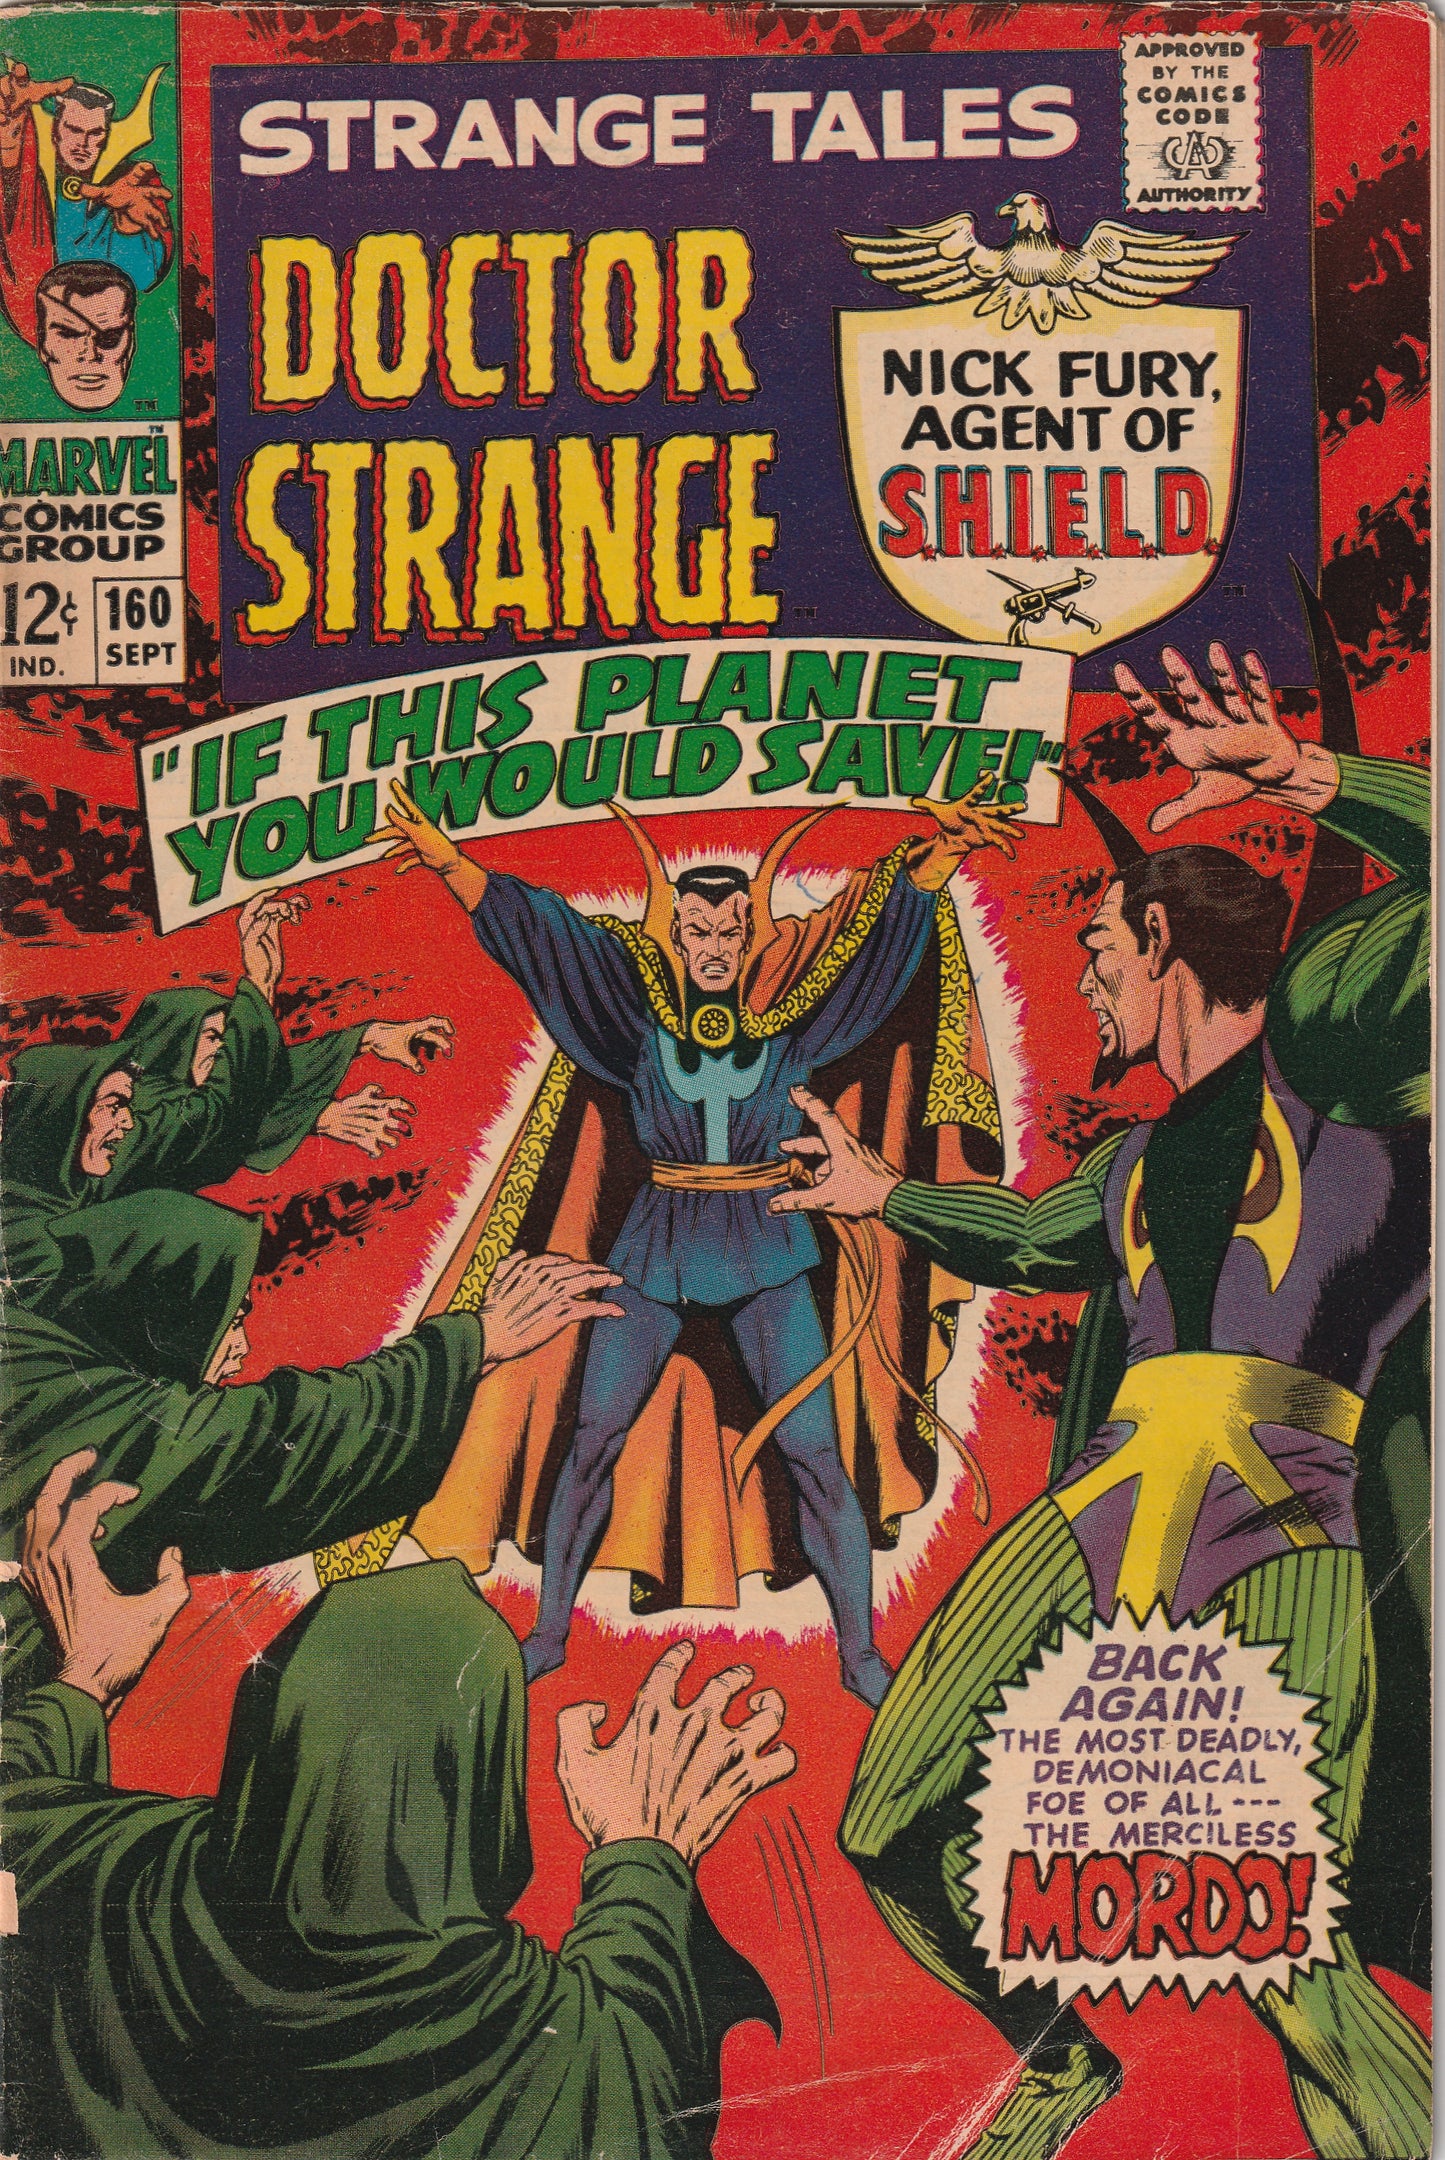 Strange Tales #160 (1967) - Steranko art/scripts